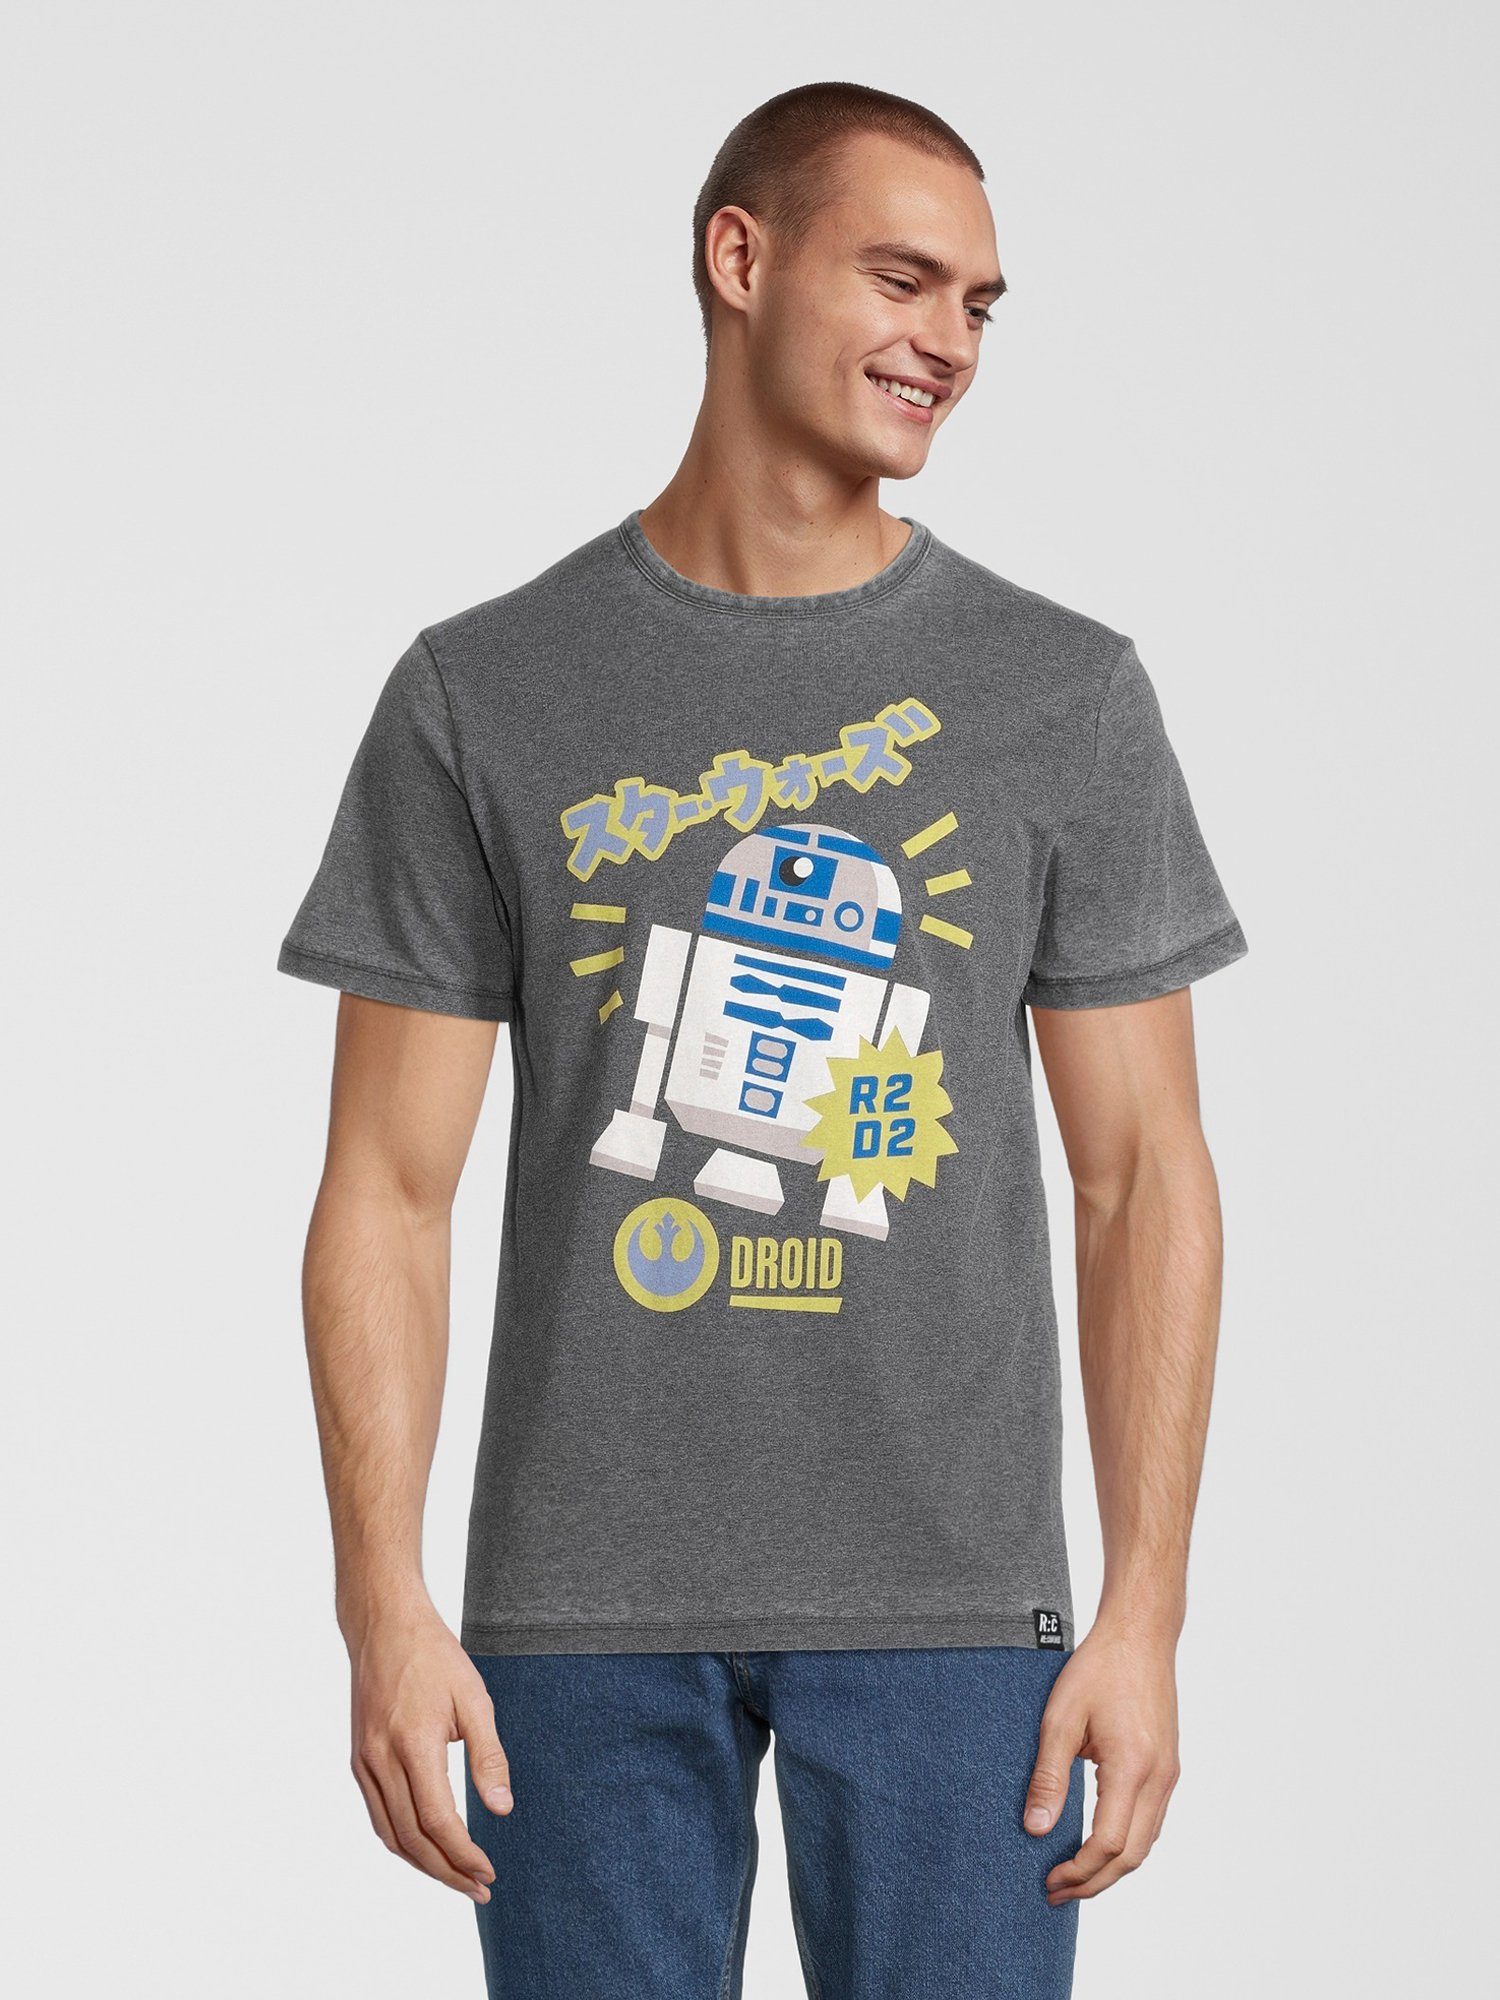 Star Recovered Wars Japanese R2D2 T-Shirt dunkelgrau